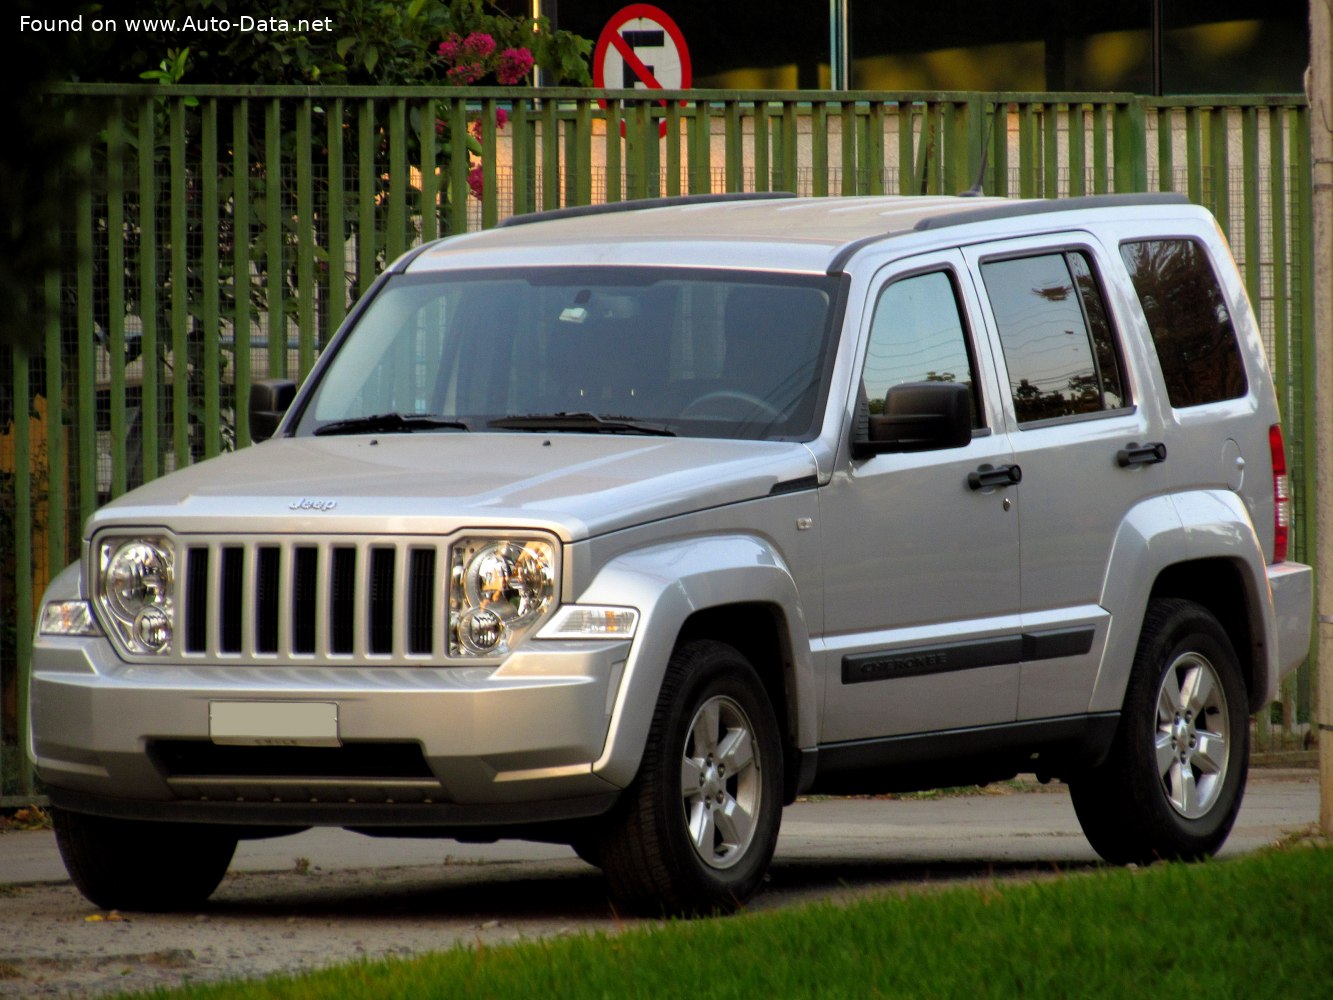 2008 Jeep Cherokee IV (KK)  V6 (205 Hp) | Technical specs, data, fuel  consumption, Dimensions